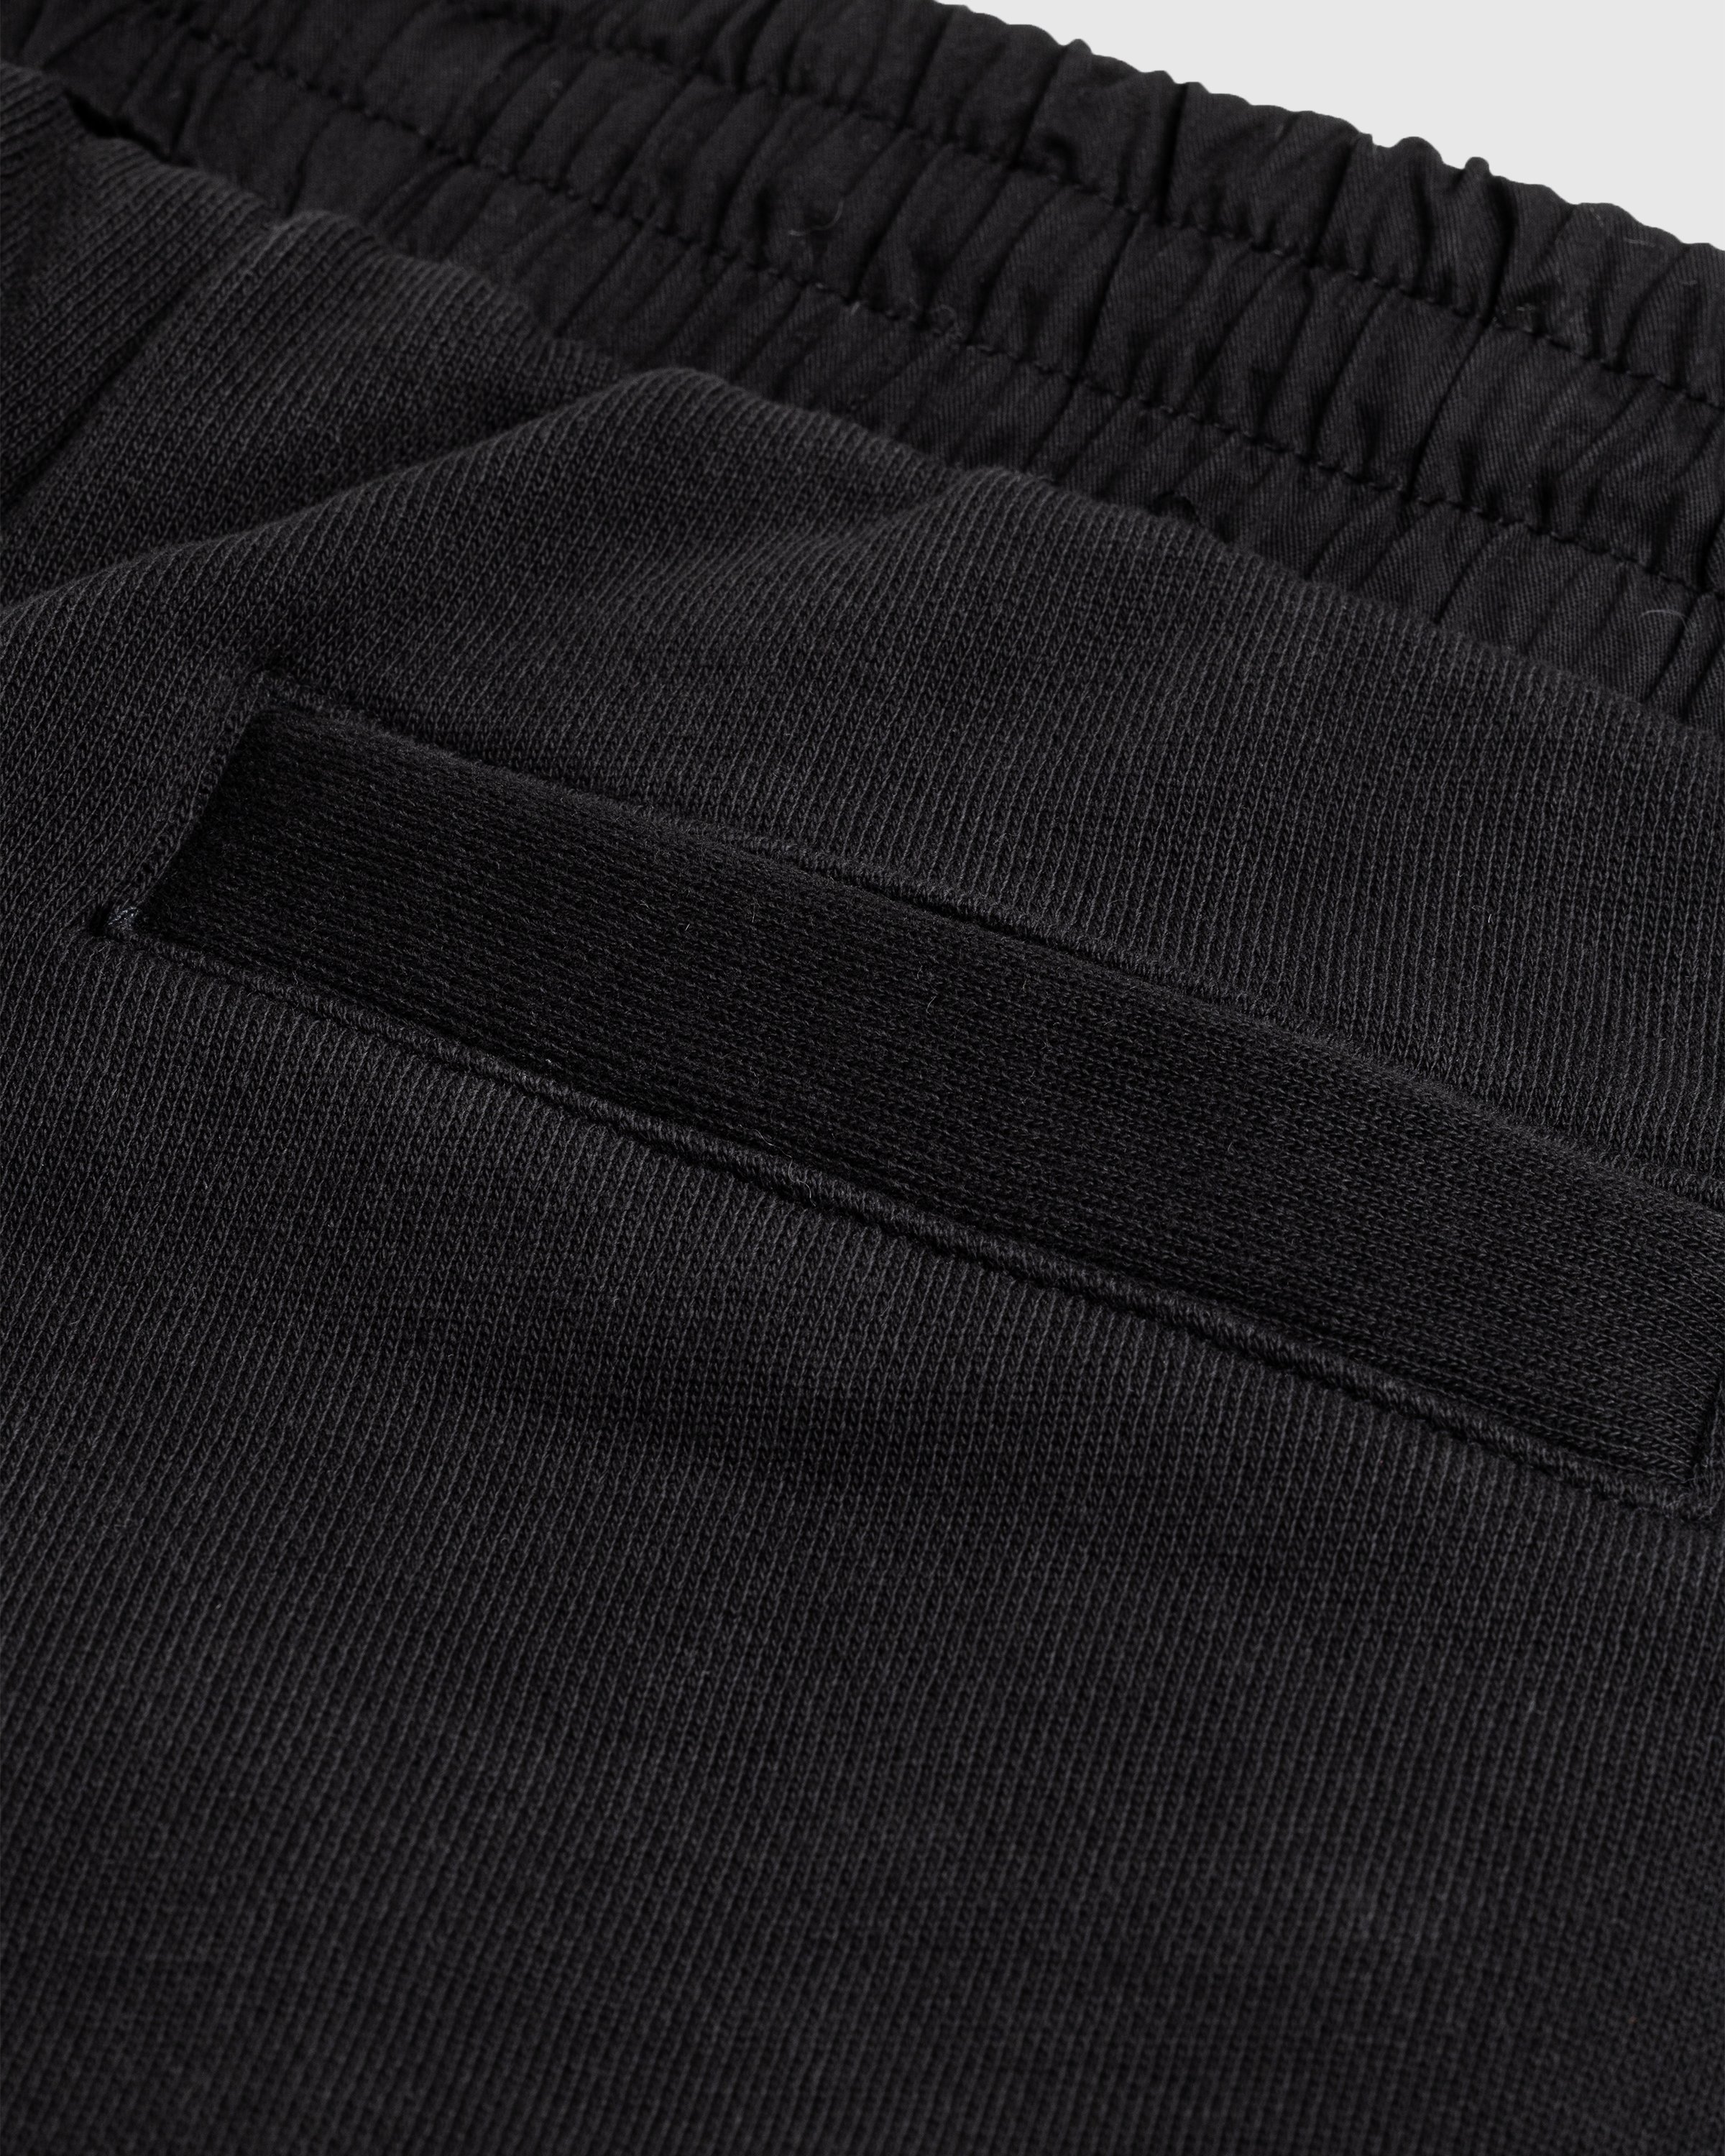 Entire Studios - Utility Sweats Soot - Clothing - Black - Image 7